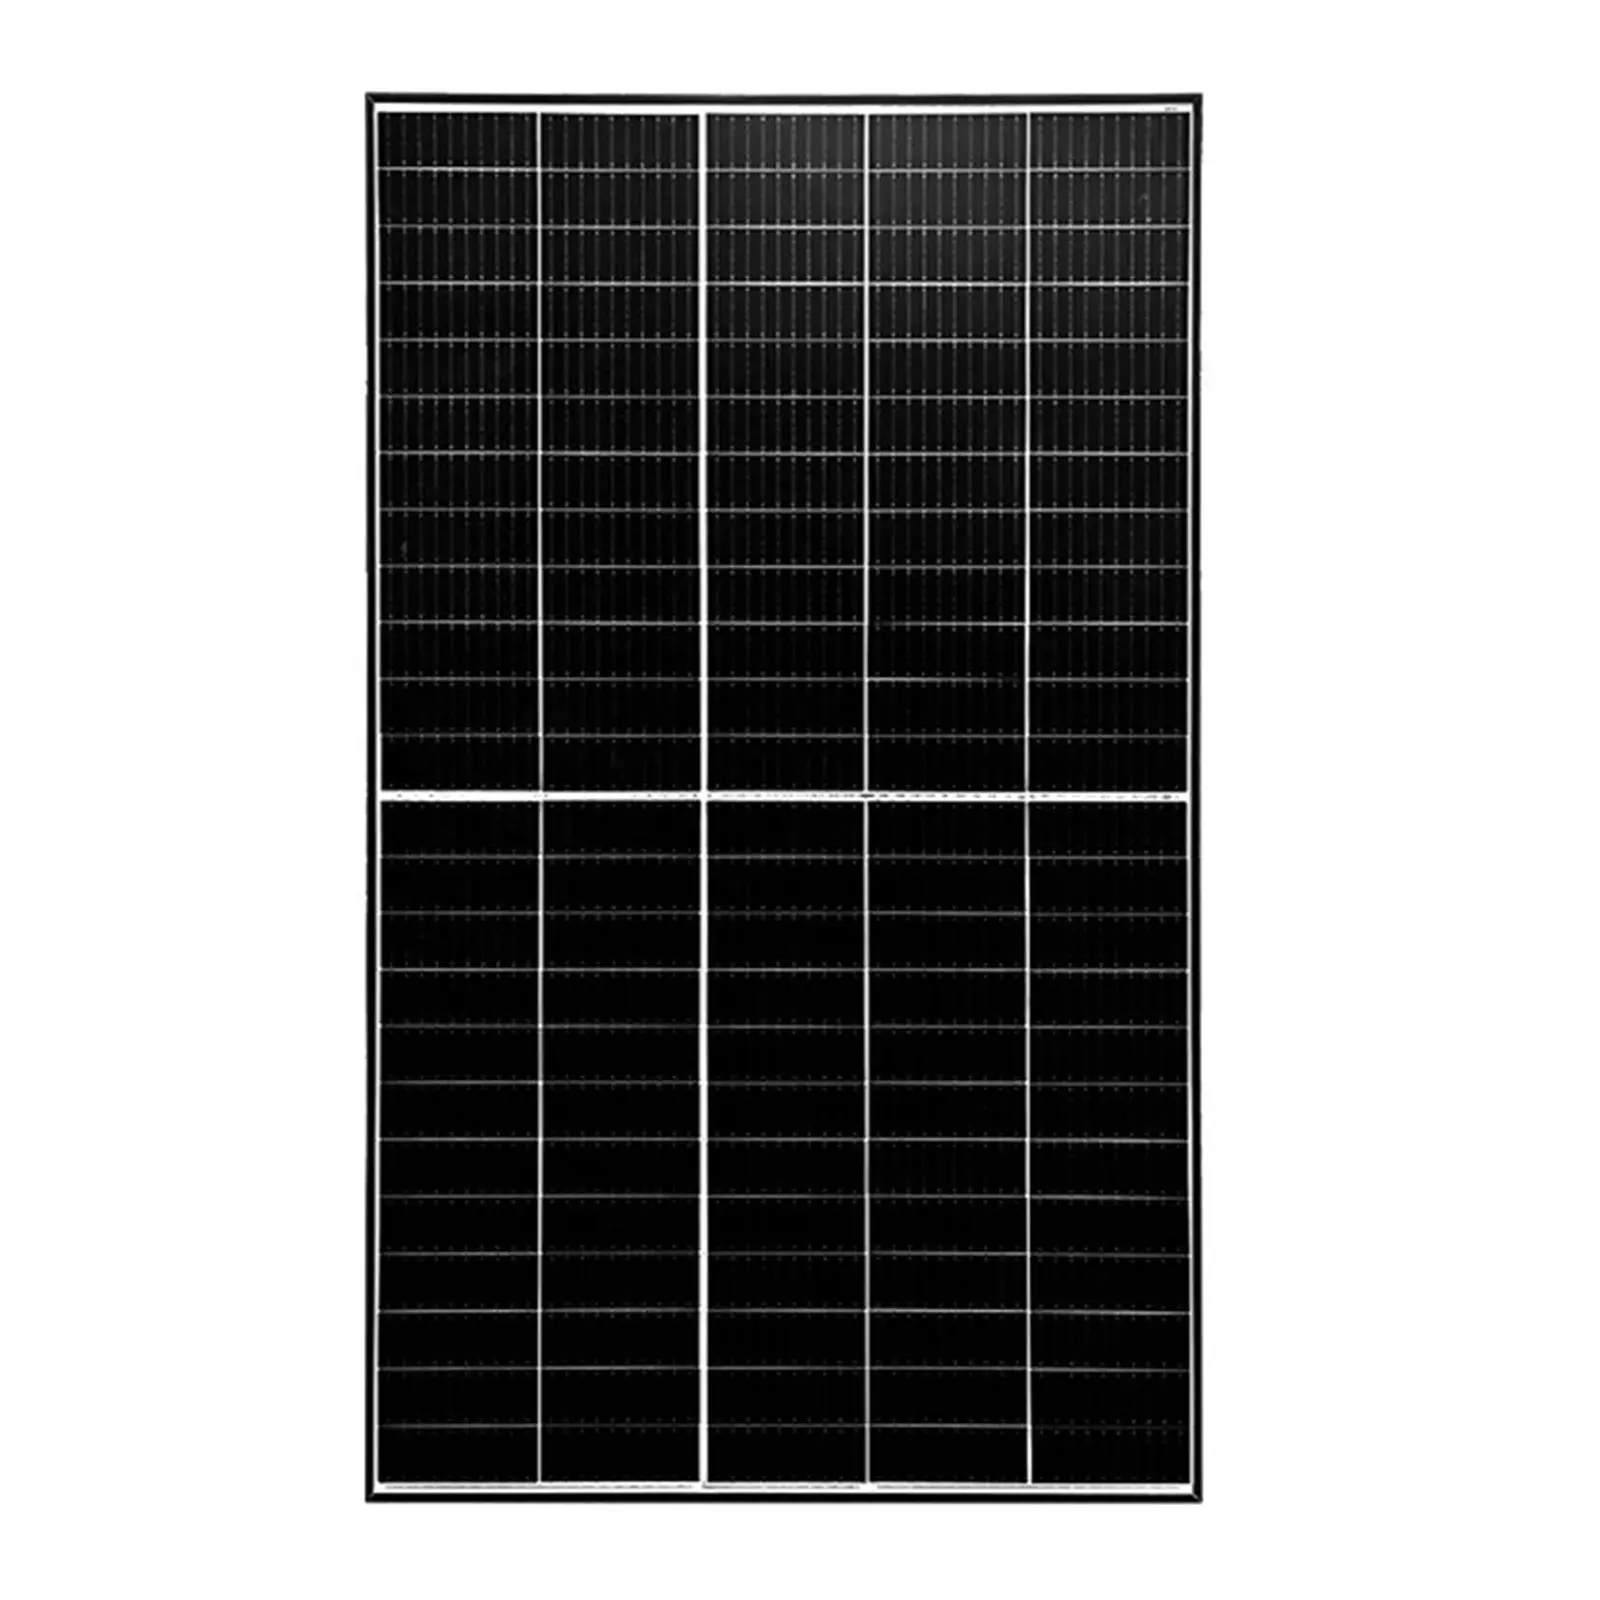 RV 용 지붕 타일 태양 전지 패널 구성 요소 키트 모바일 가정용 태양 전지 패널 전체 키트 최저 가격 제조